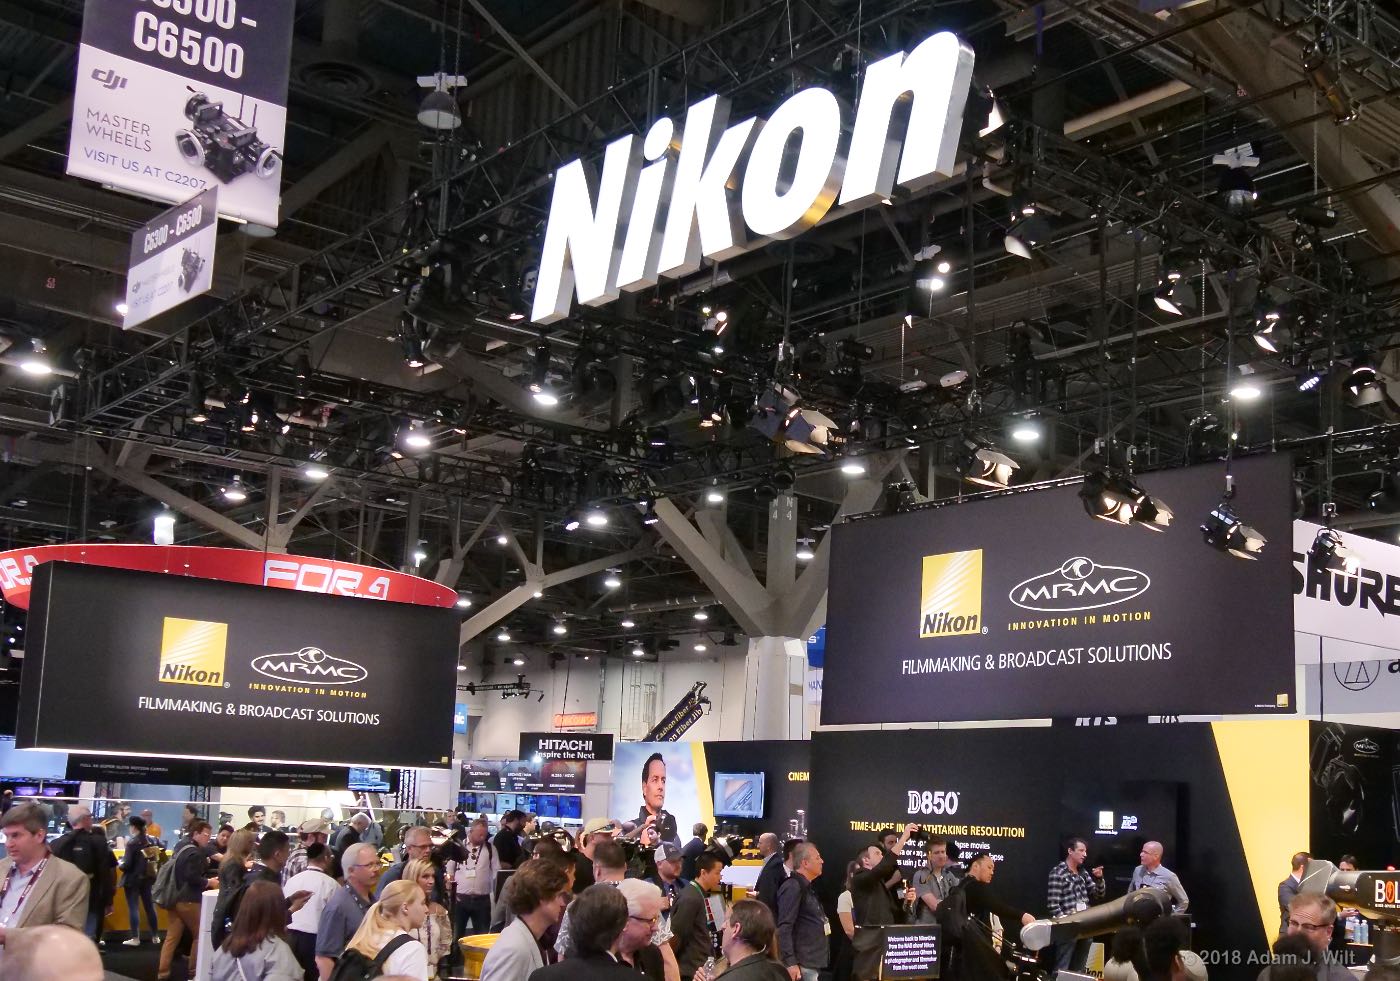 The Nikon Booth